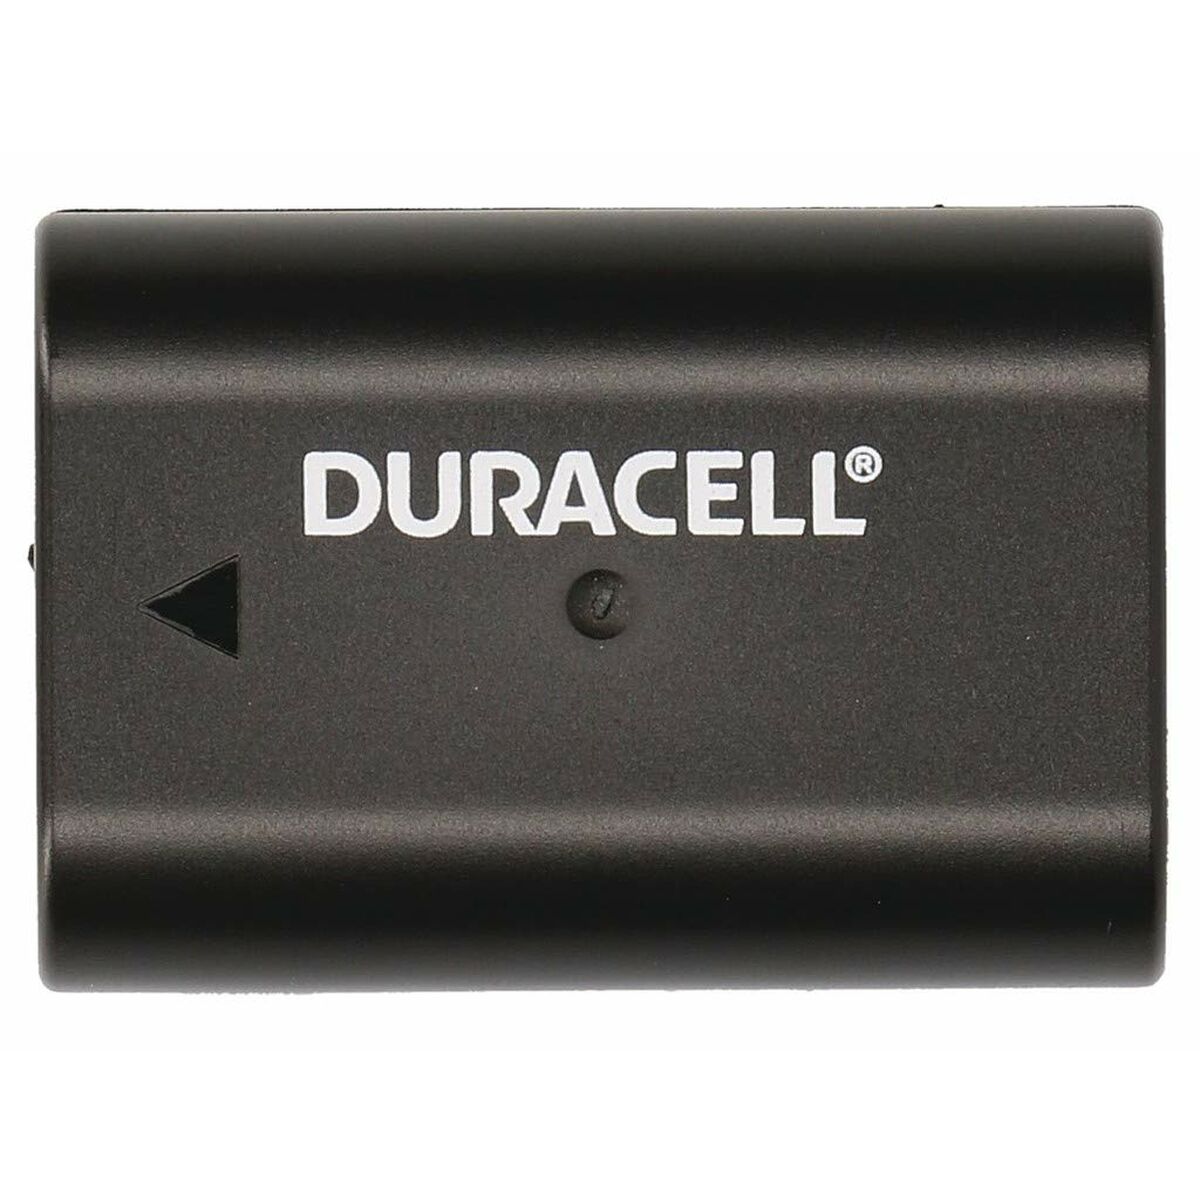 Camera Batteries DURACELL DRPBLF19 (Refurbished A)